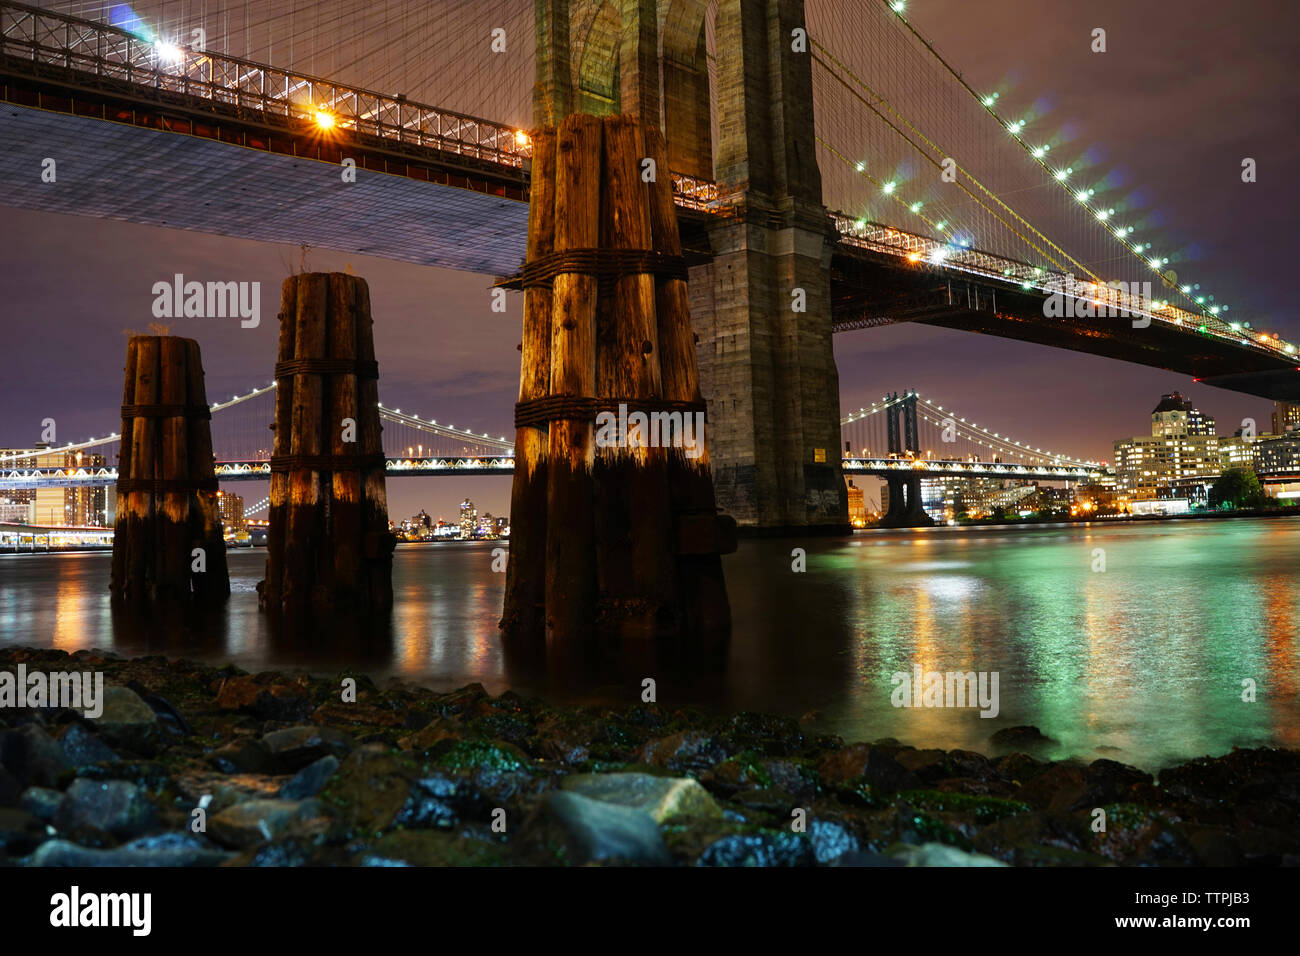 Illuminated bridges over East river at night Stock Photo